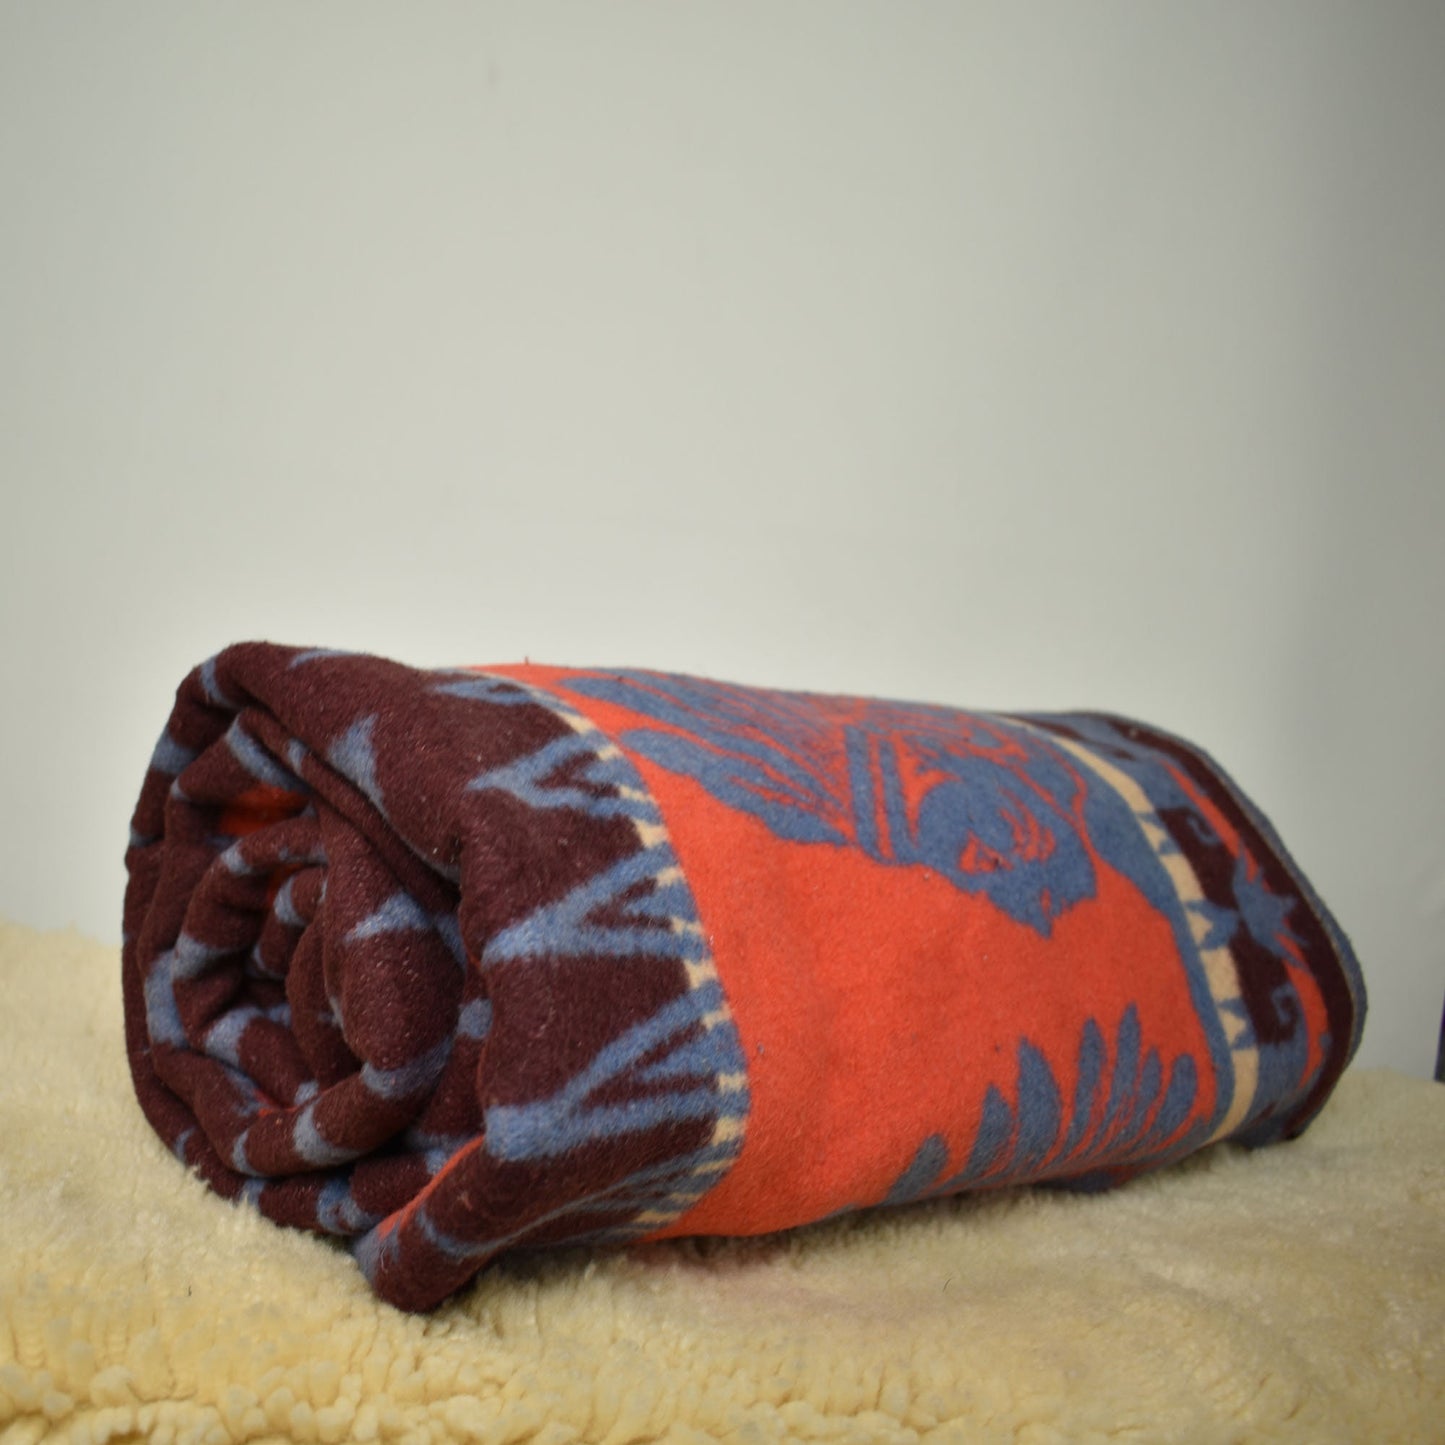 Vintage 30s / 40s Camp Blanket - Beacon Blanket Style - Feels like Cotton Wool Blend